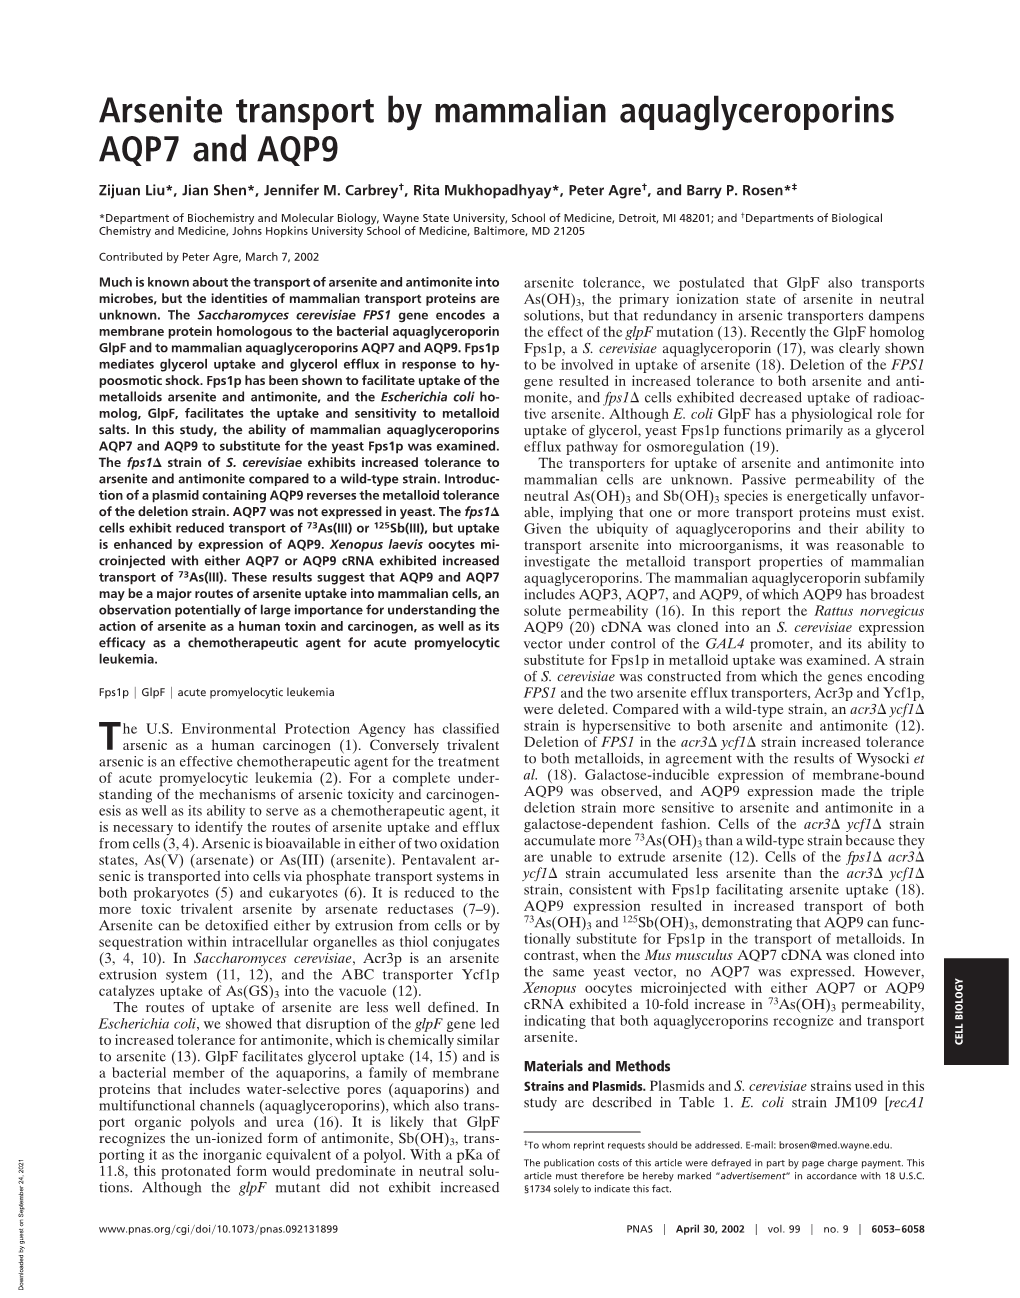 Arsenite Transport by Mammalian Aquaglyceroporins AQP7 and AQP9